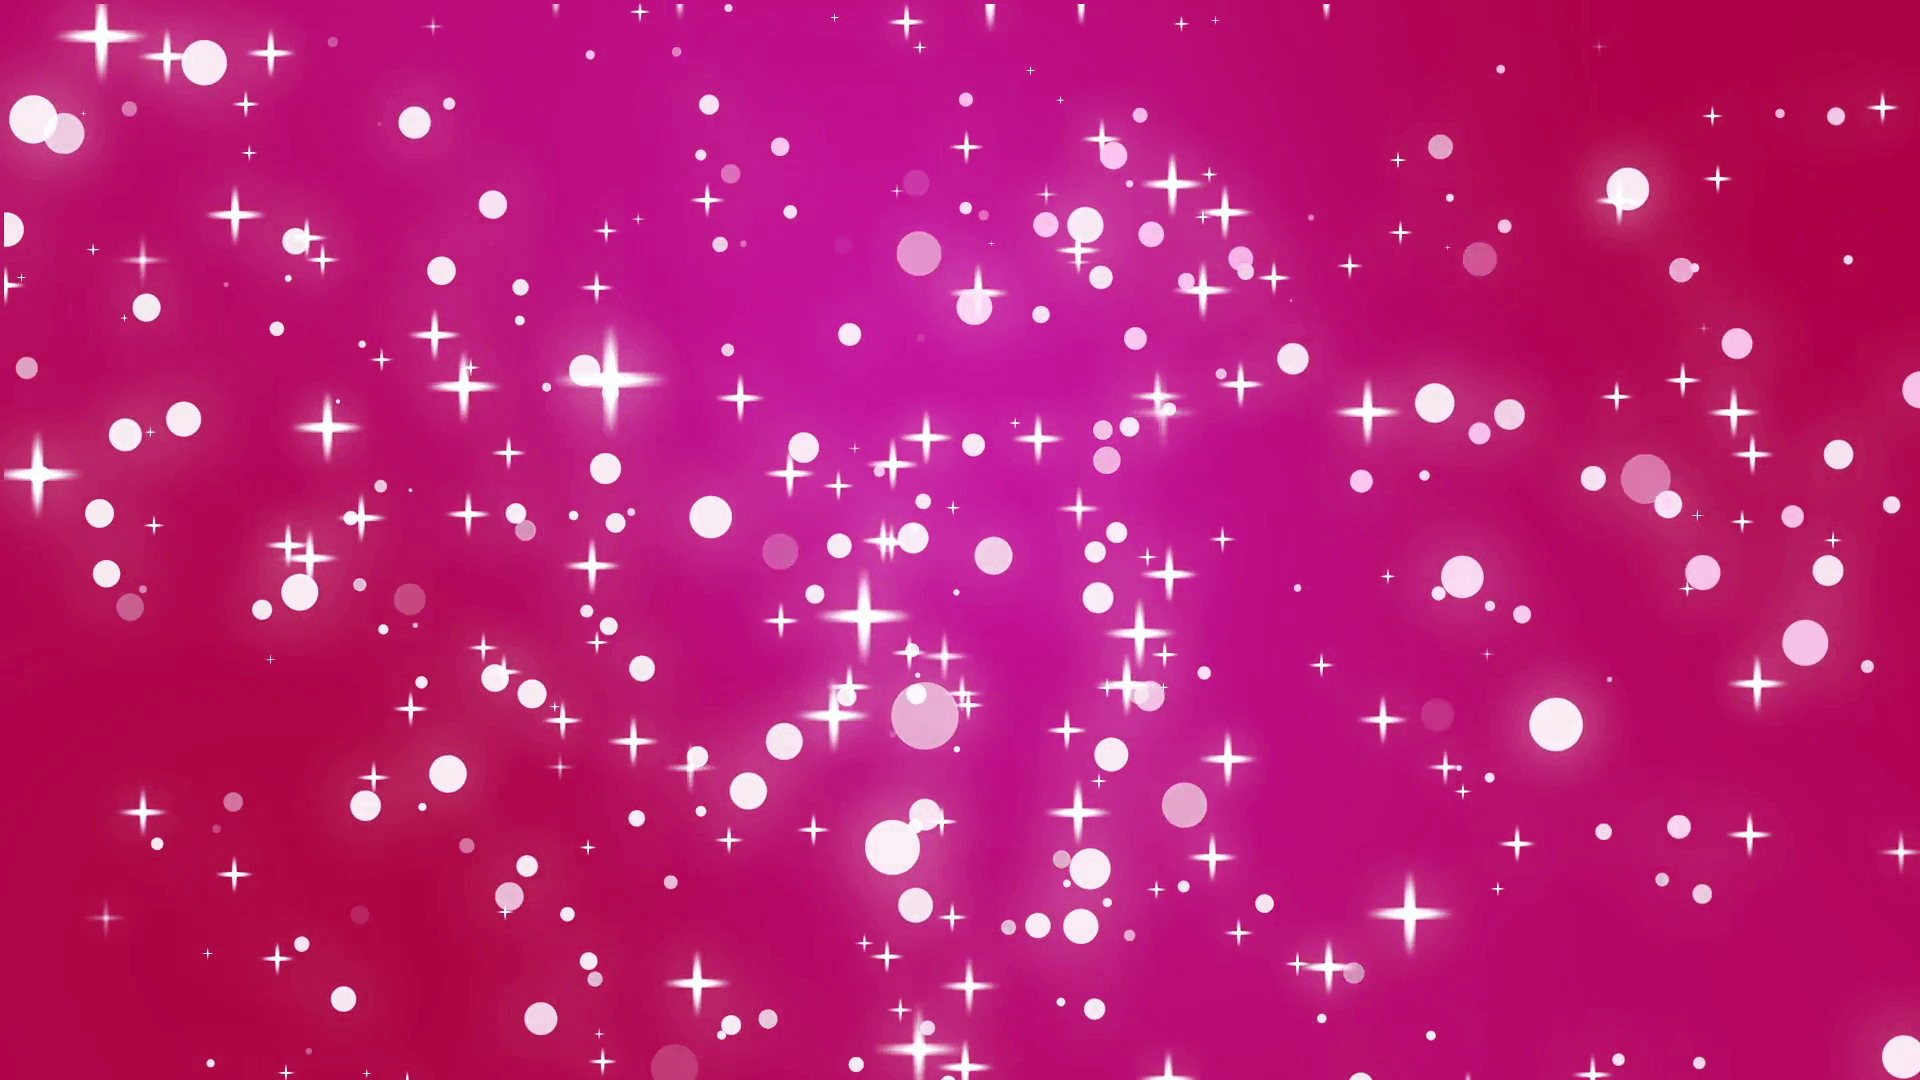 Pink shimmering stars shoot across a dark background. Motion